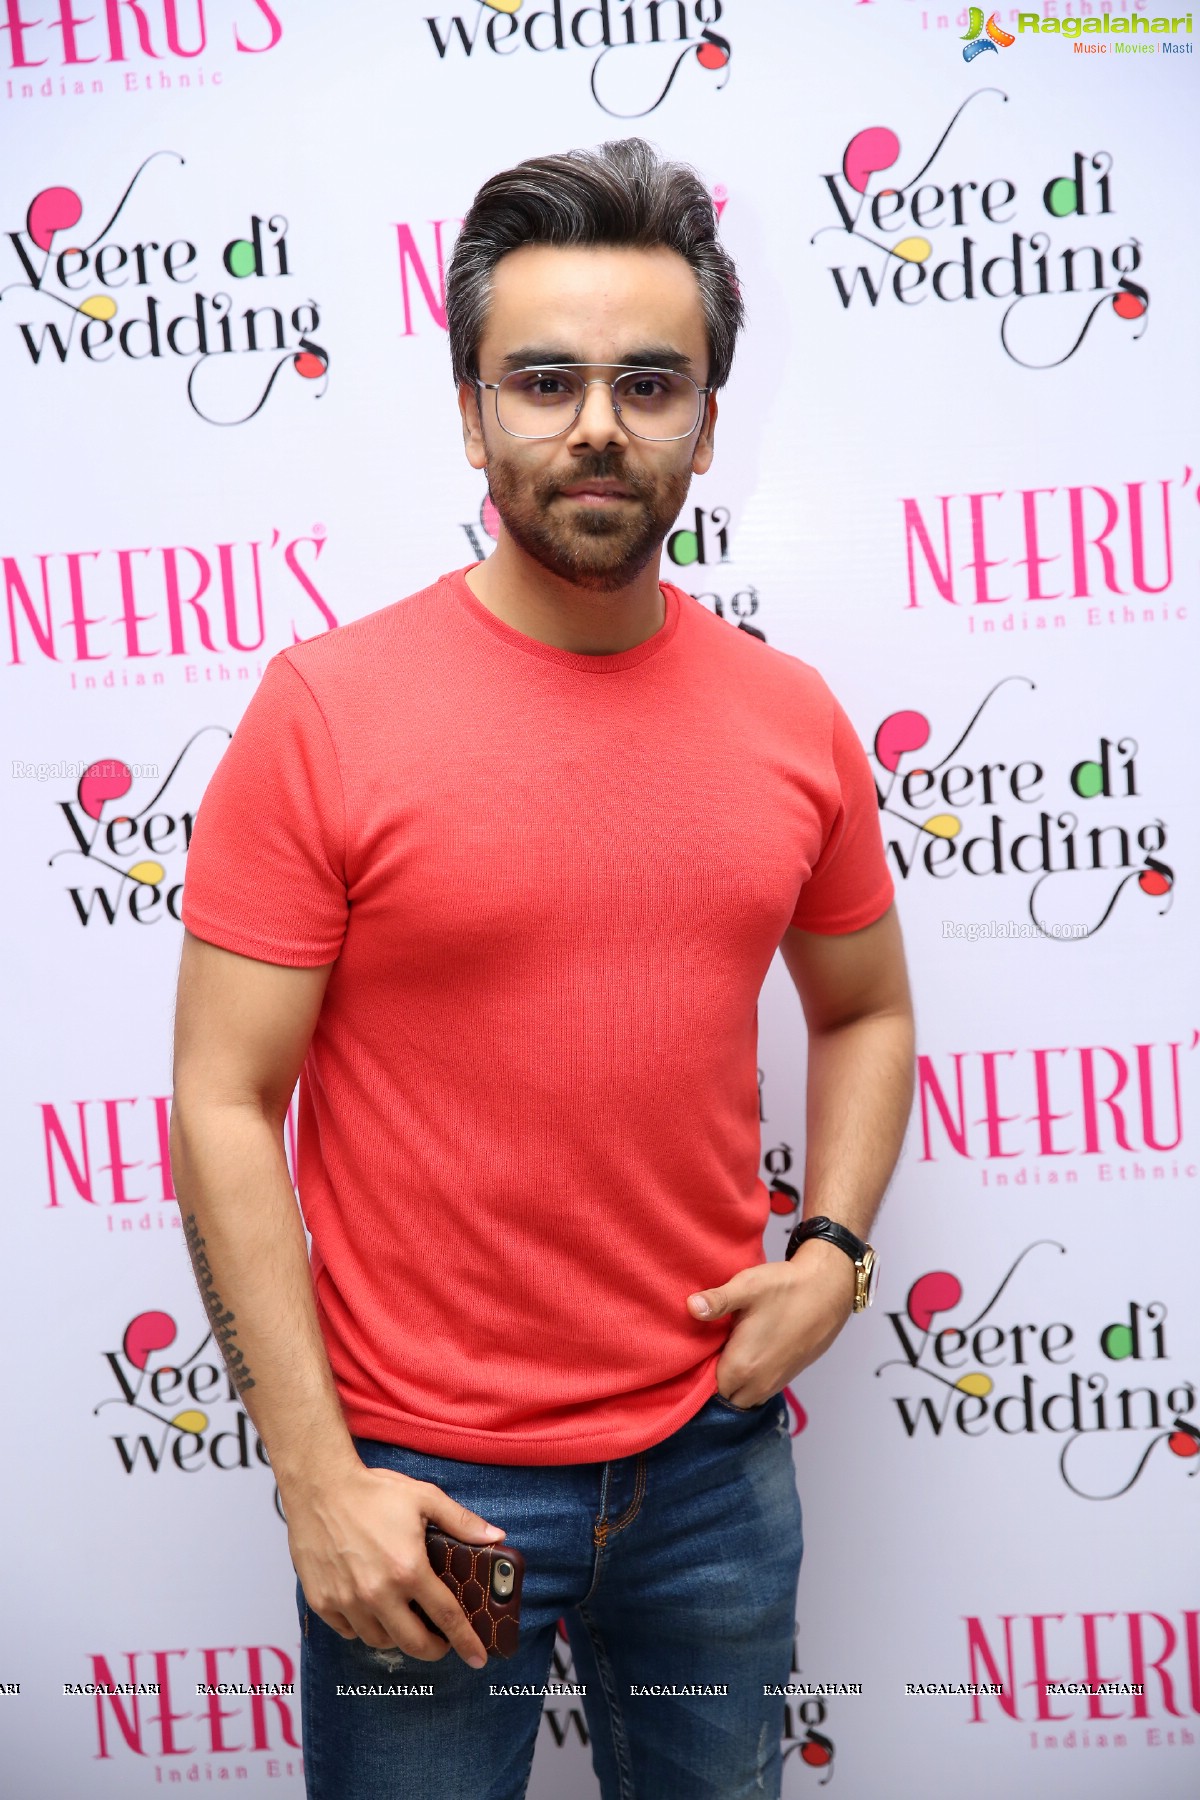 Veere Di Wedding - Neeru's Exclusive Screening at PVR Banjara Hills, Hyderabad